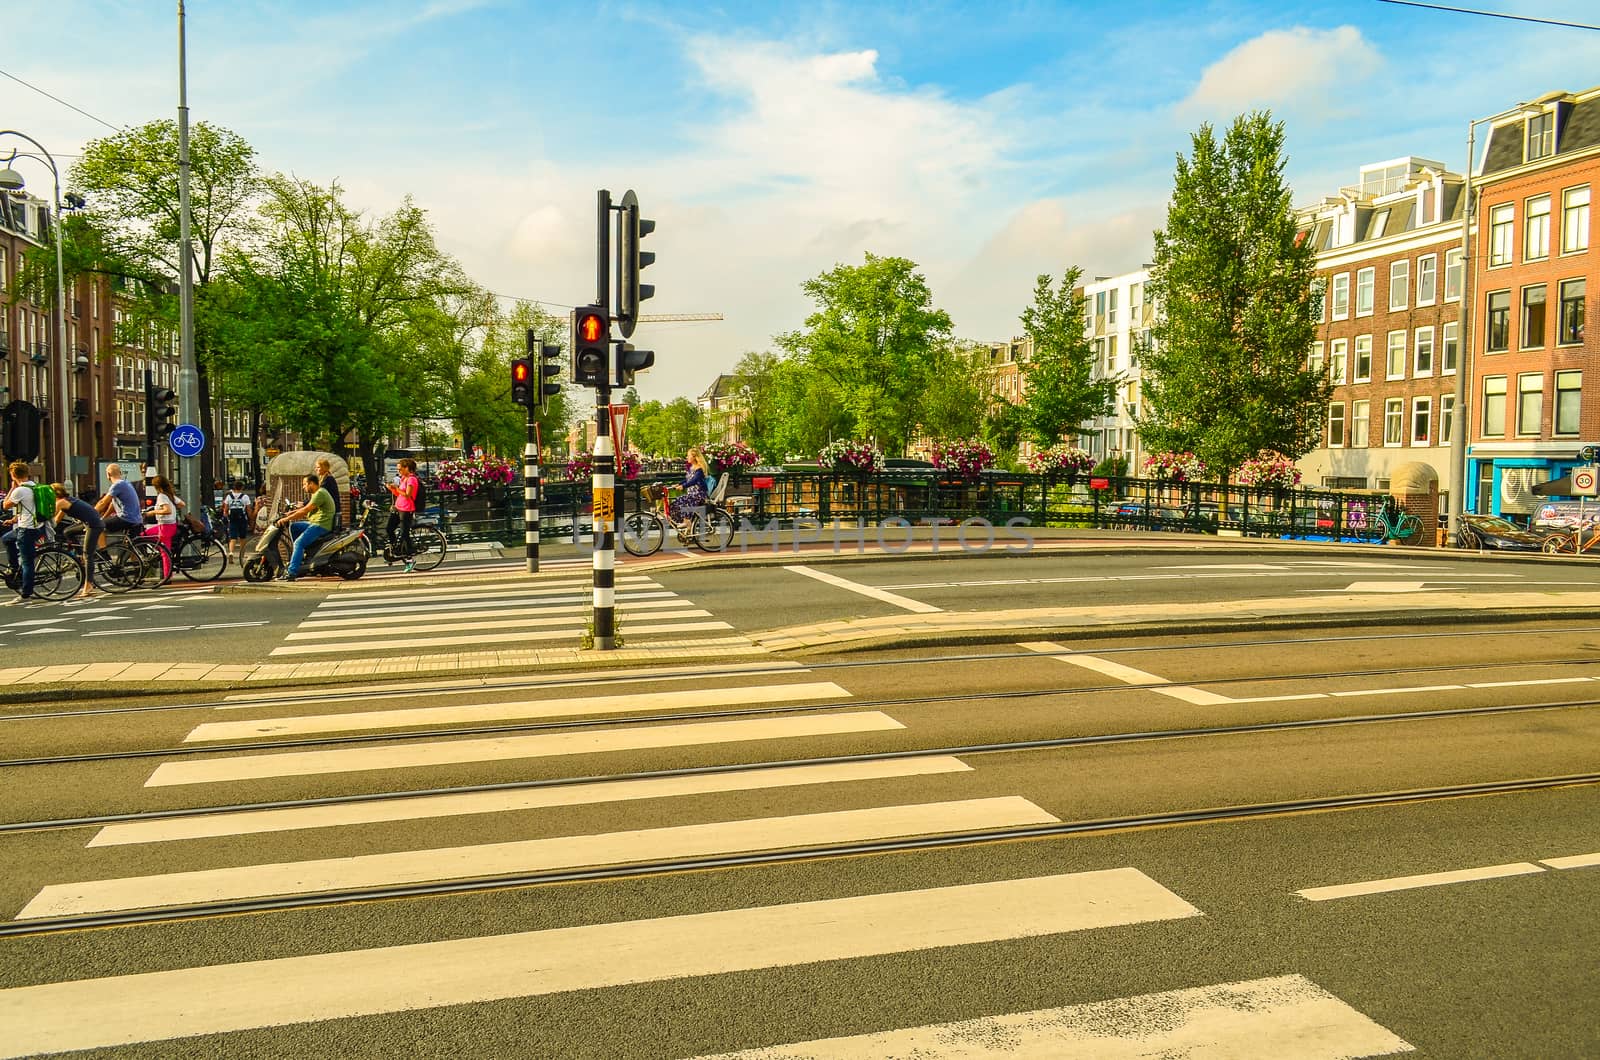 crosswalk with red light in Amsterdam, Netherlands (Holland) by chernobrovin